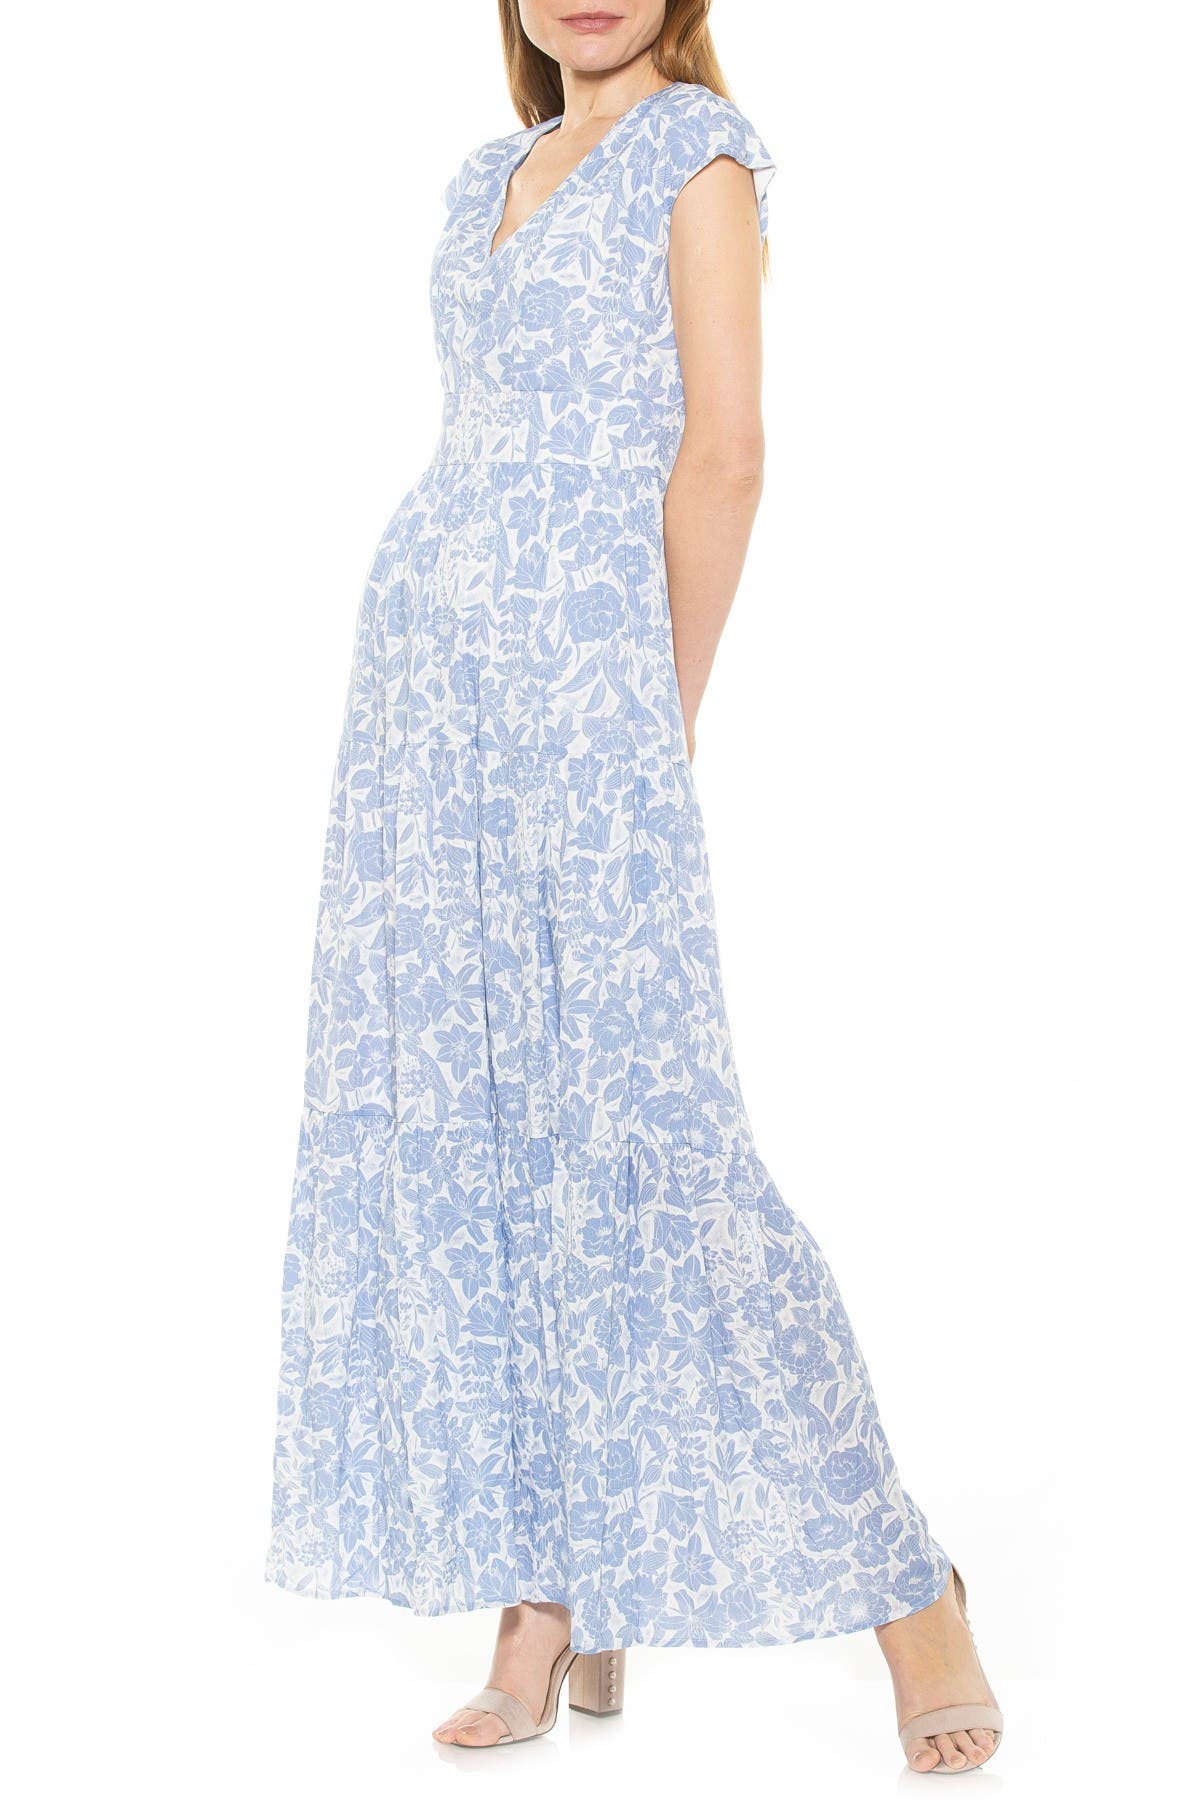 Alexia Admor Summer V-neck Tiered Maxi Dress In Light Blue Multi